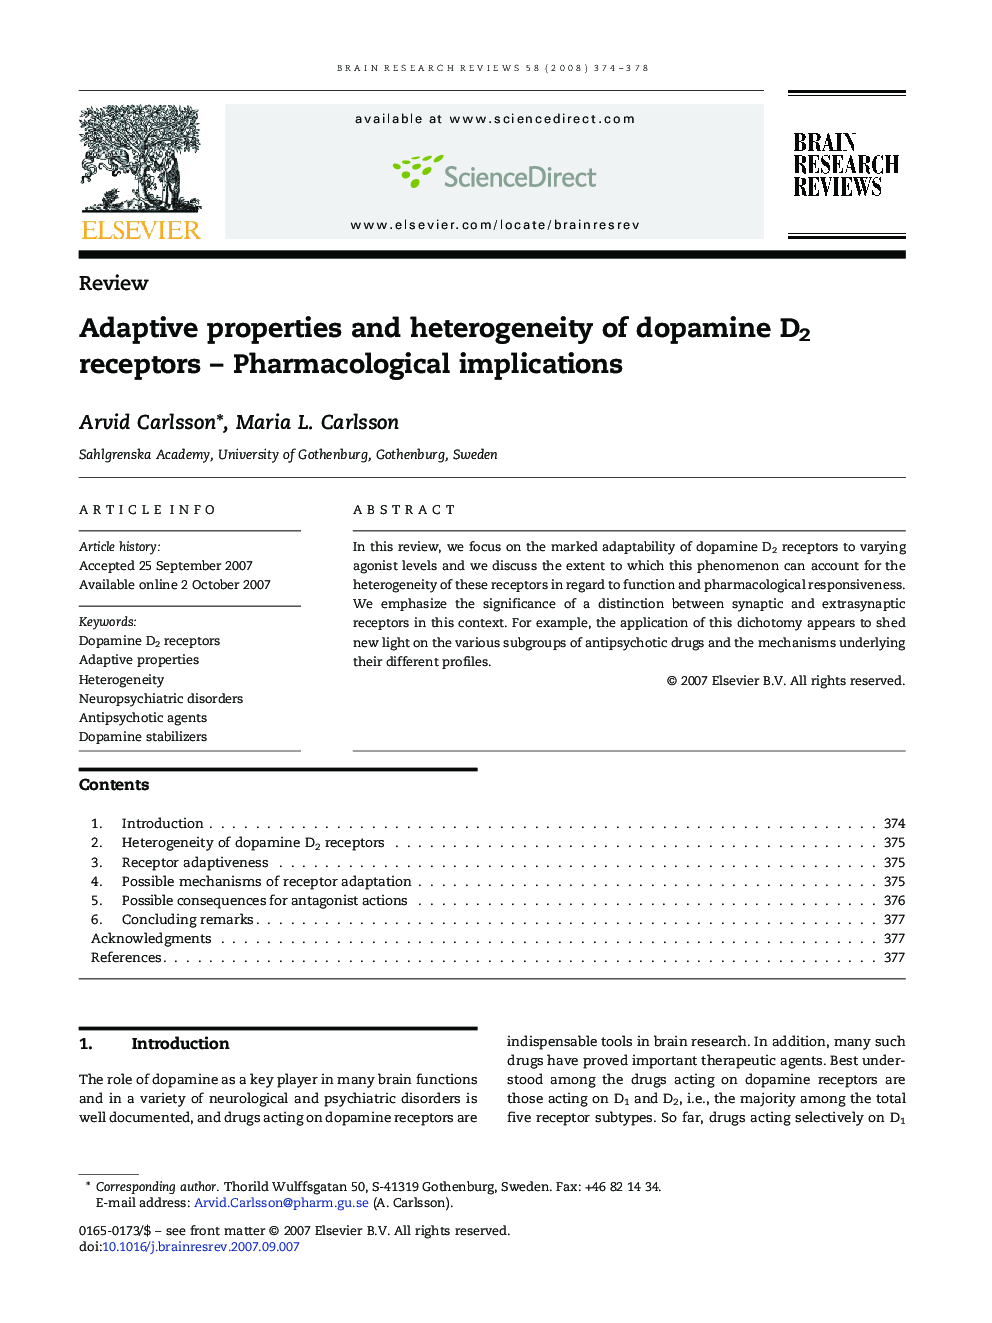 Adaptive properties and heterogeneity of dopamine D2 receptors – Pharmacological implications